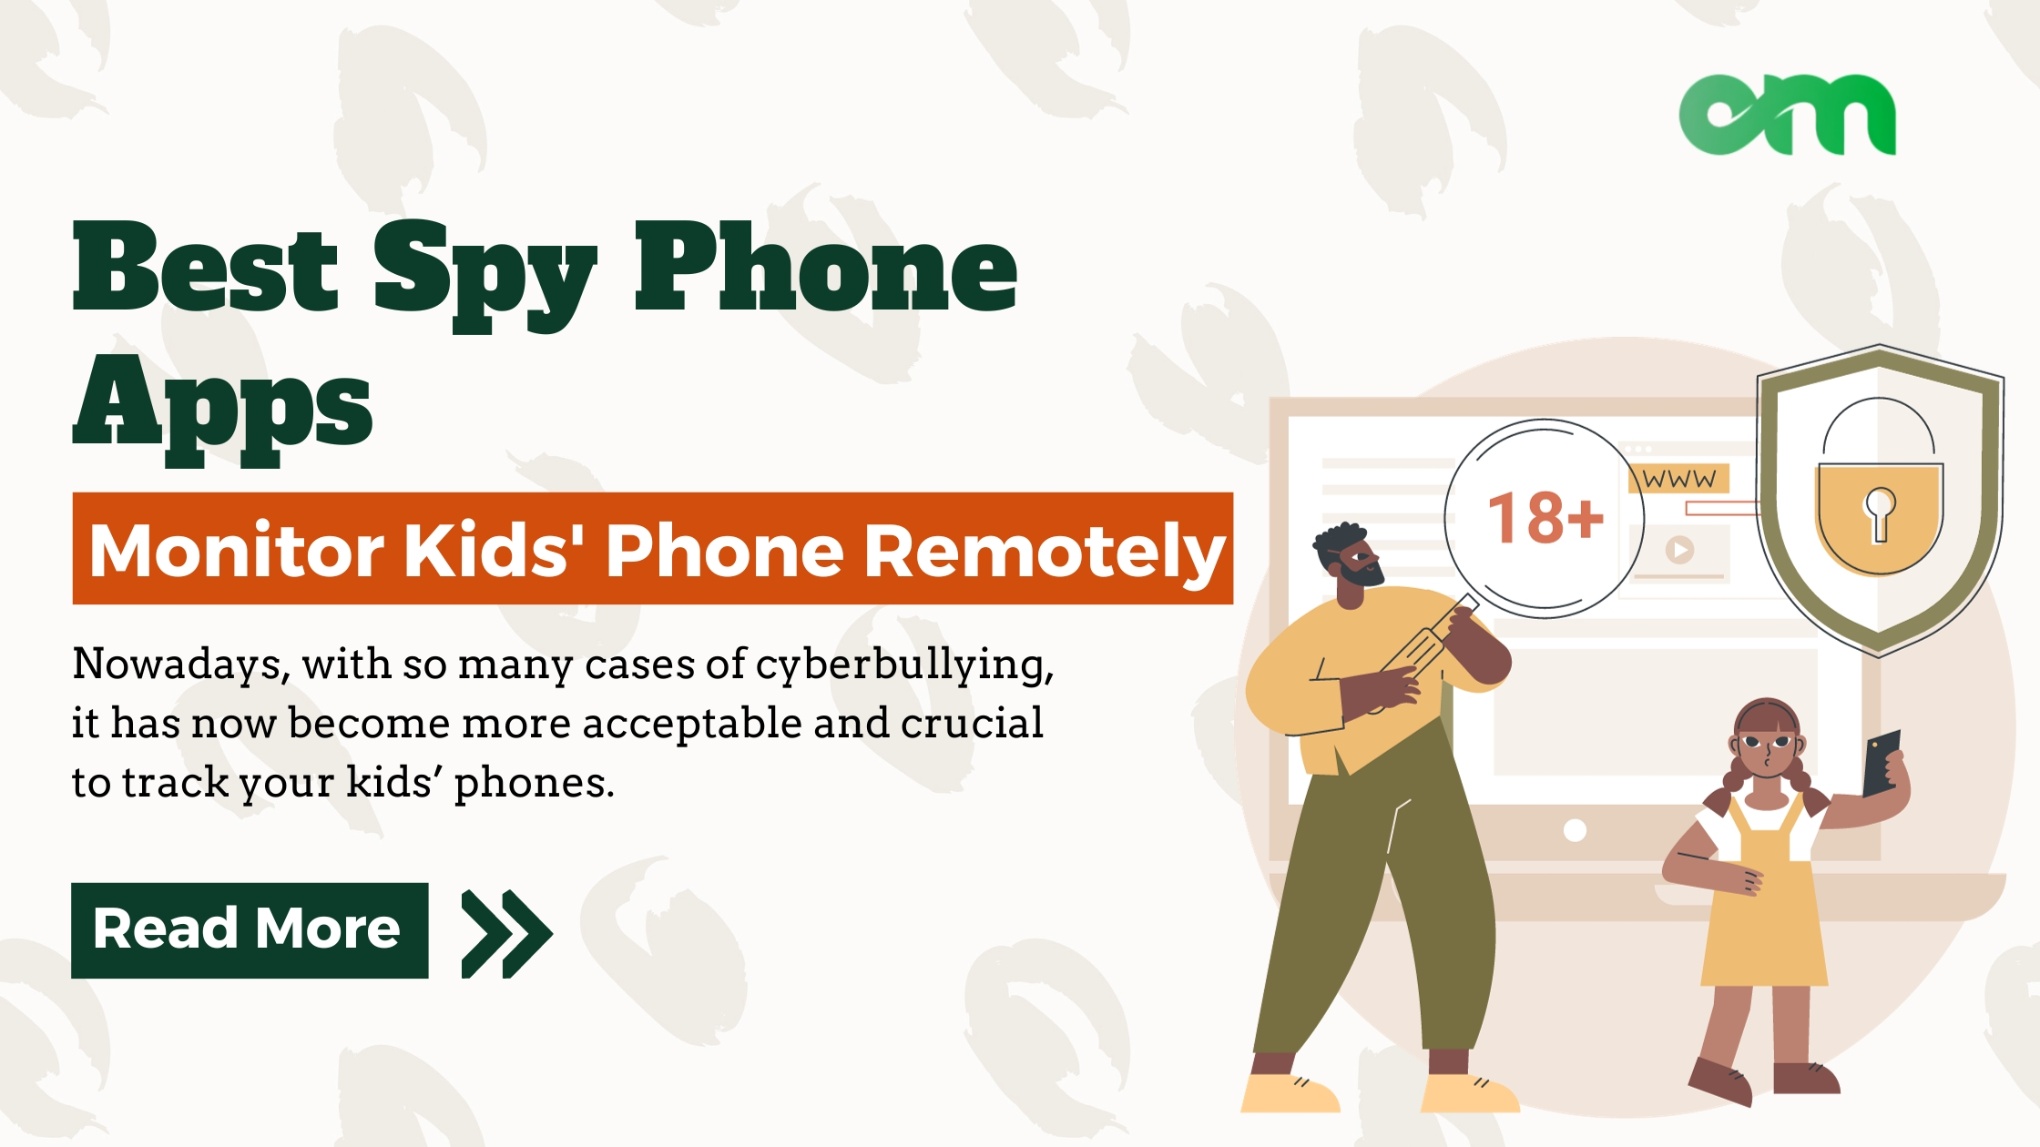 Onemonitar - The Best Spy Phone App to Monitor Kid's Phone Remotely